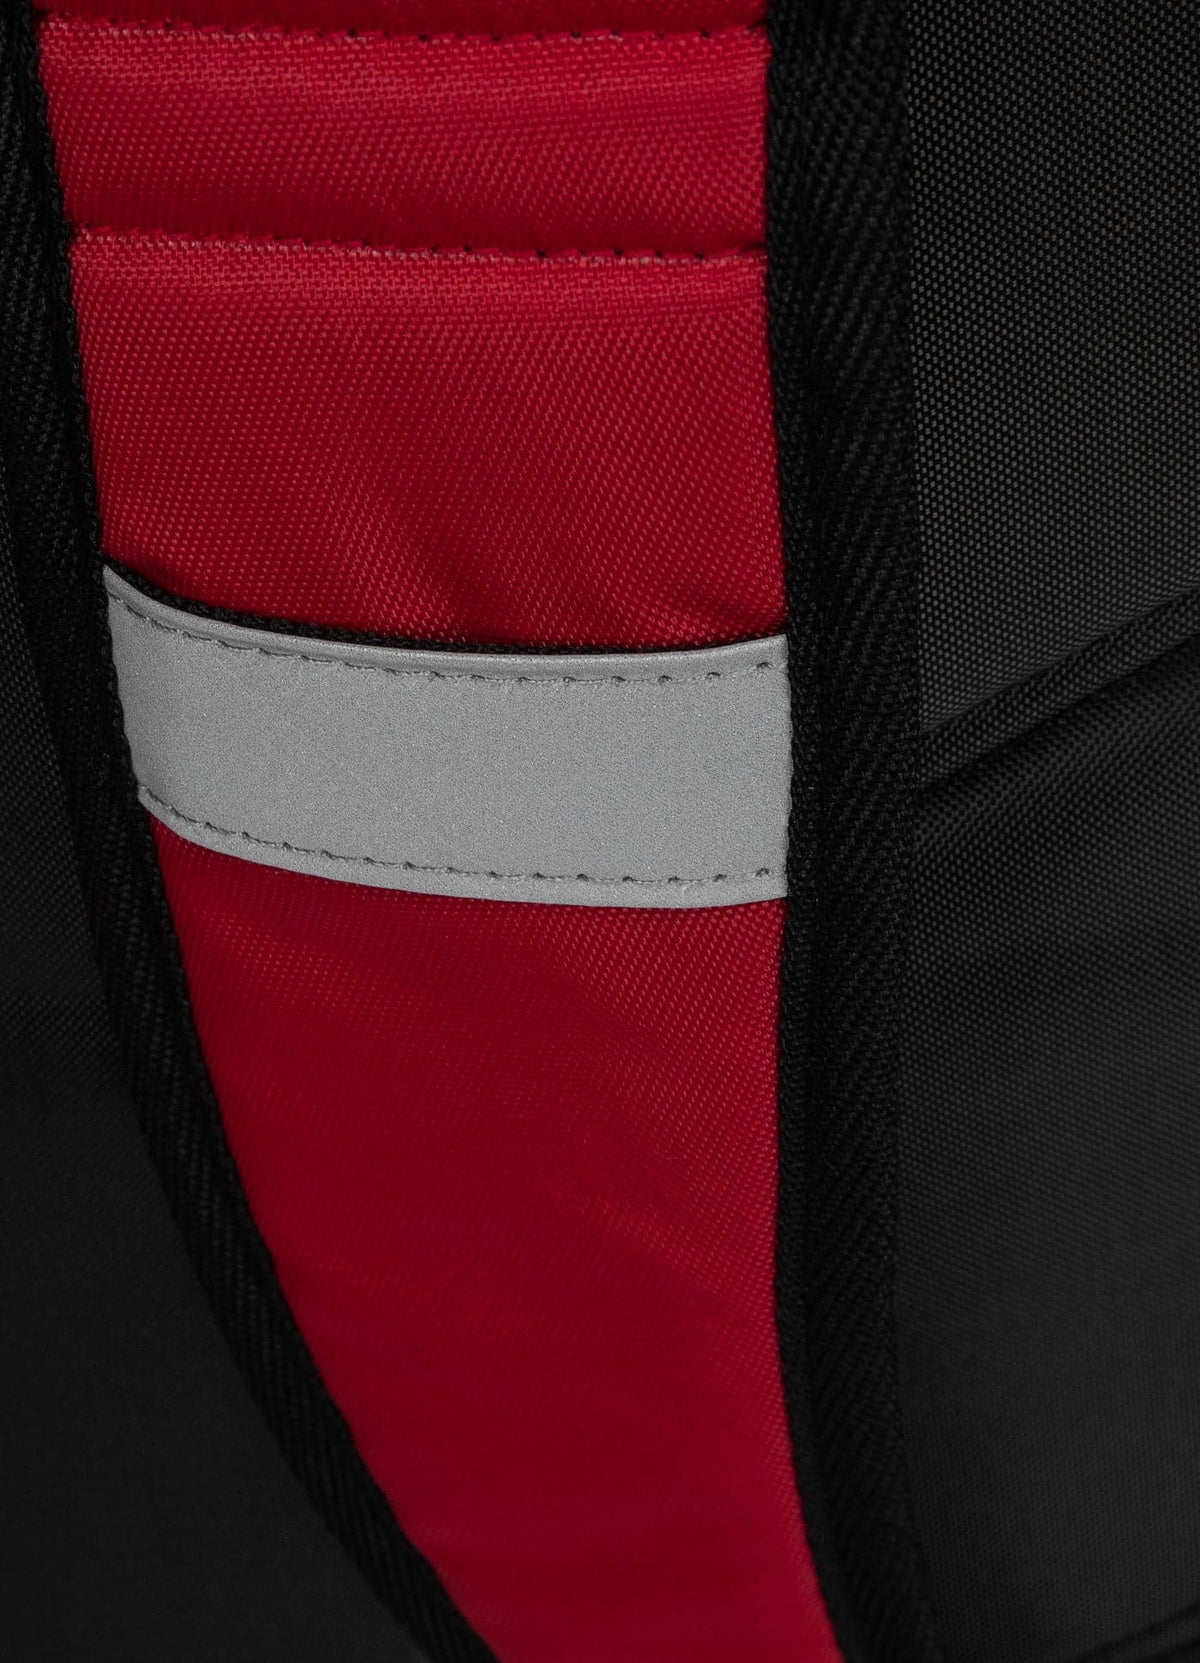 HILLTOP 2 Red/Black Backpack - Pitbullstore.eu